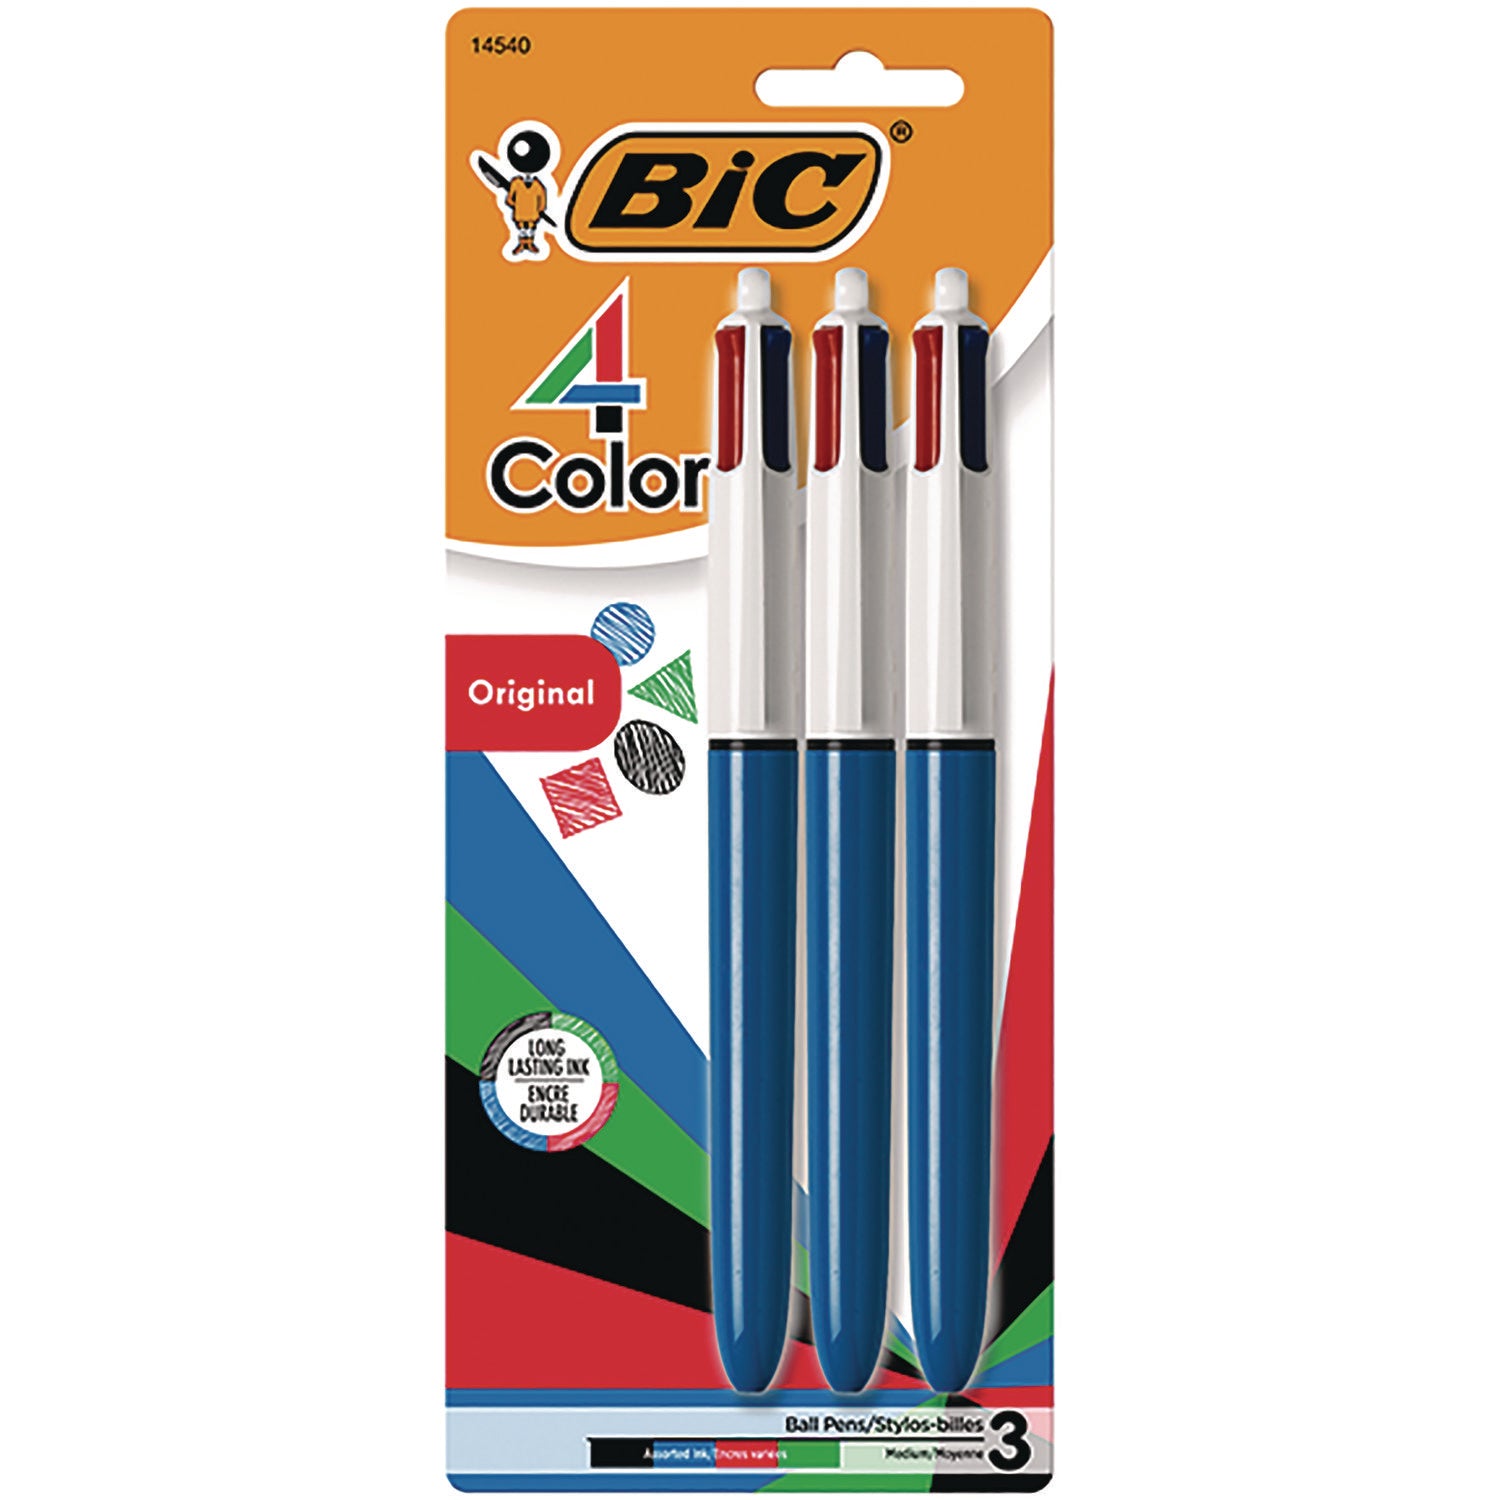 4-Color Multi-Color Ballpoint Pen, Retractable, Medium 1mm, Black/Blue/Green/Red Ink, Randomly Assorted Barrel Colors, 3/Pack - 